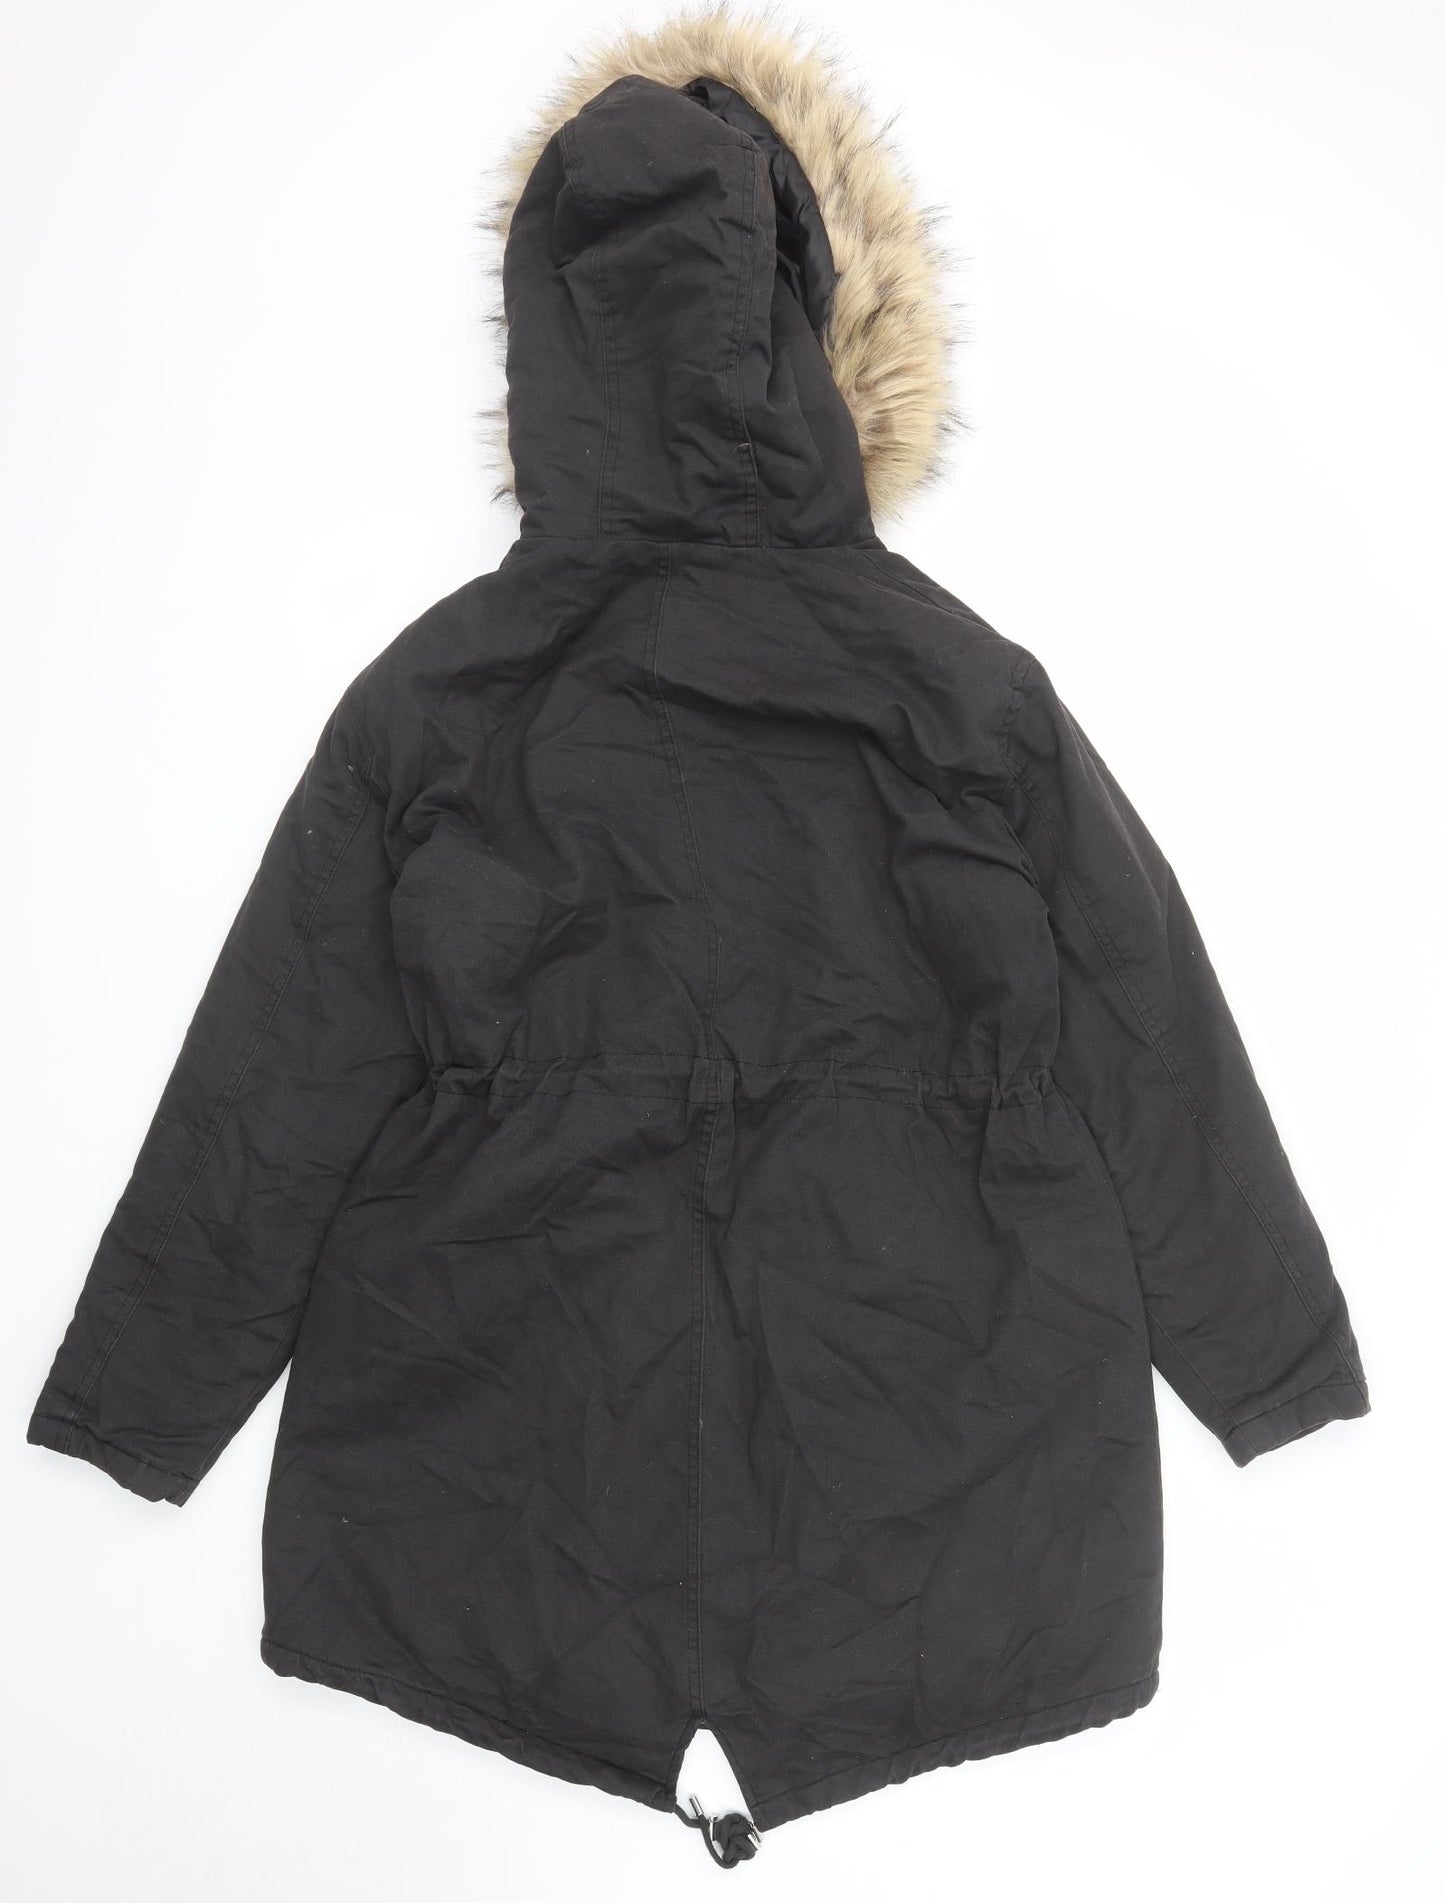 New Look Womens Black Parka Coat Size 12 Zip